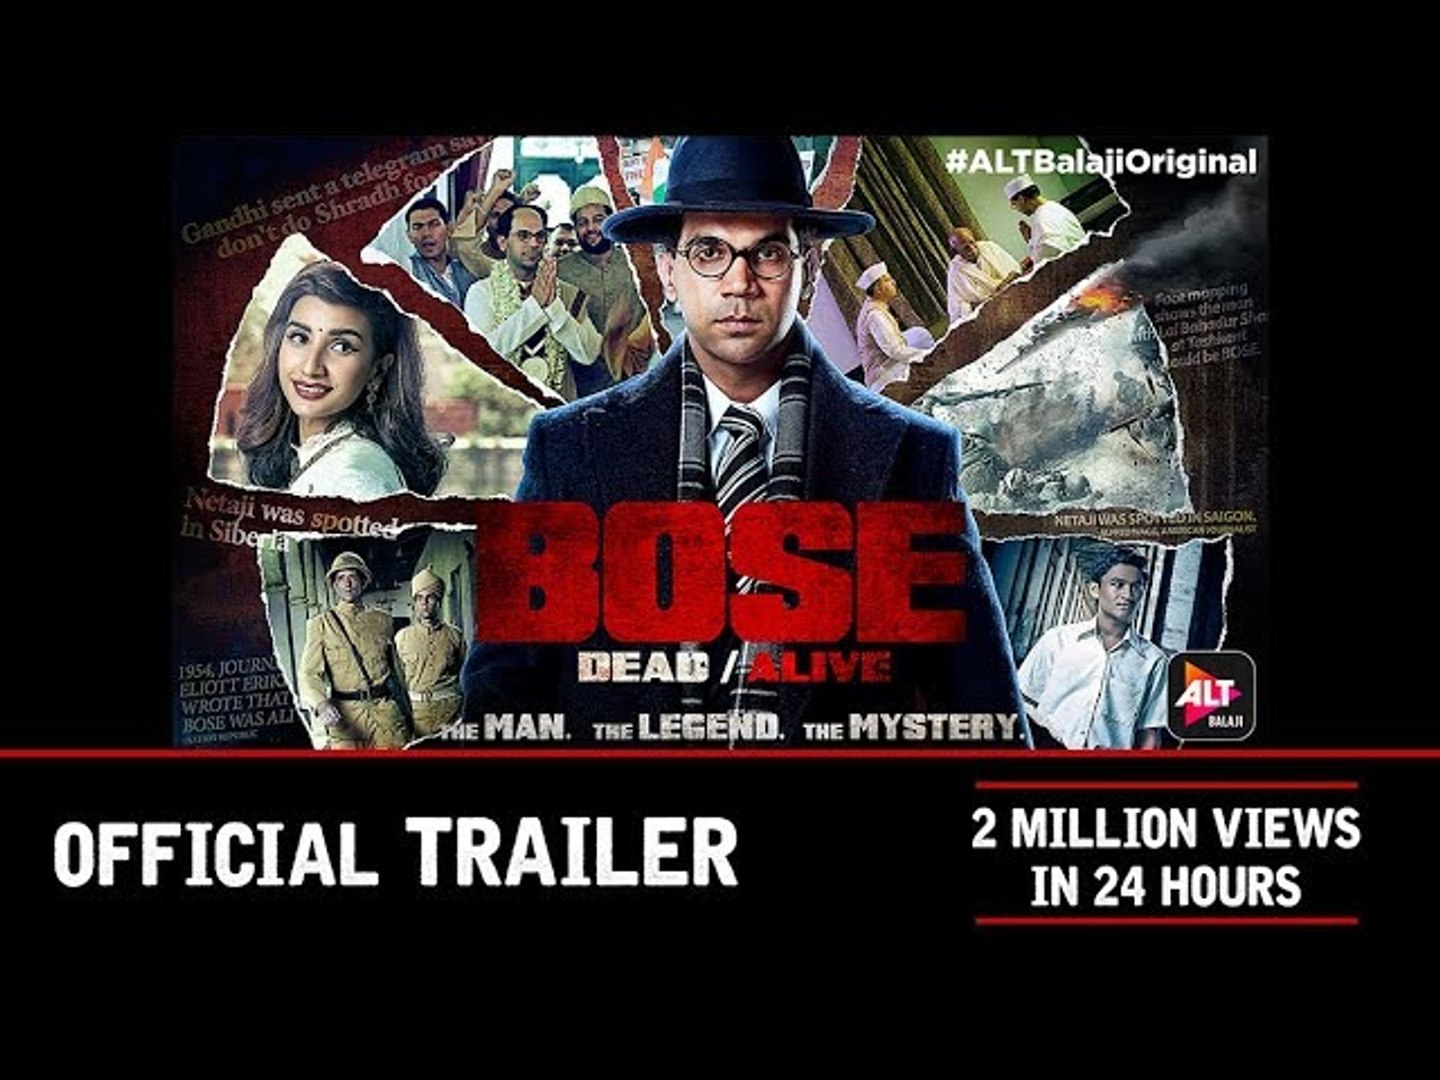 BOSE DEAD / ALIVE Full HD Official Trailer 2017 - Rajkummar Rao,  Patralekhaa Paul, Edward Sonnenblick - video Dailymotion